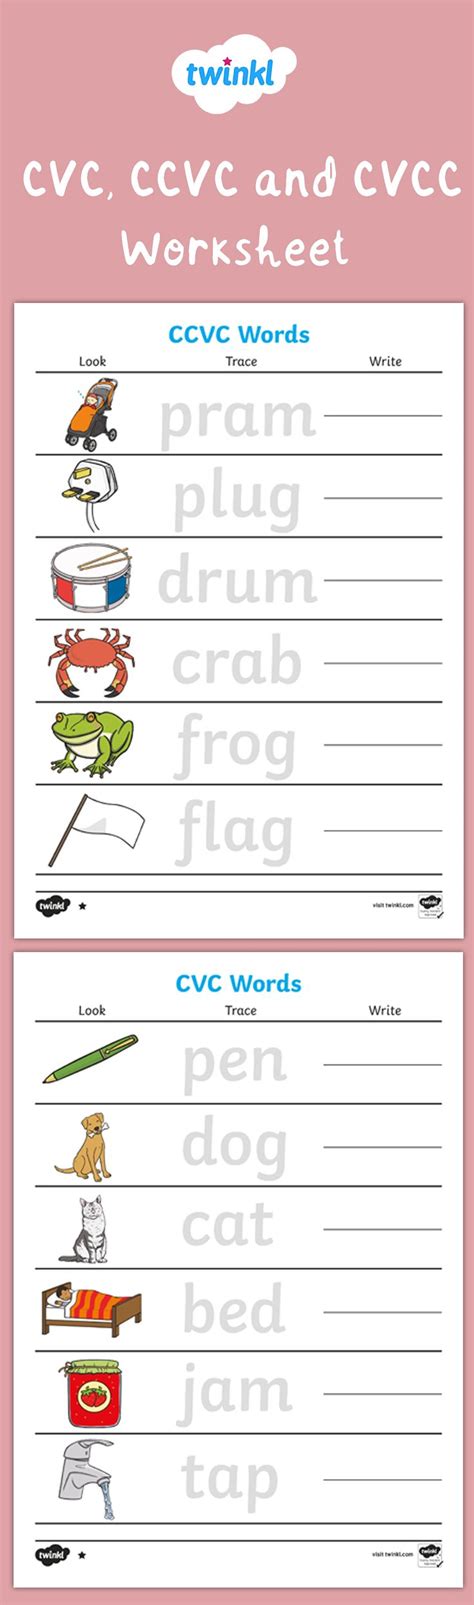 Ccvc Worksheets